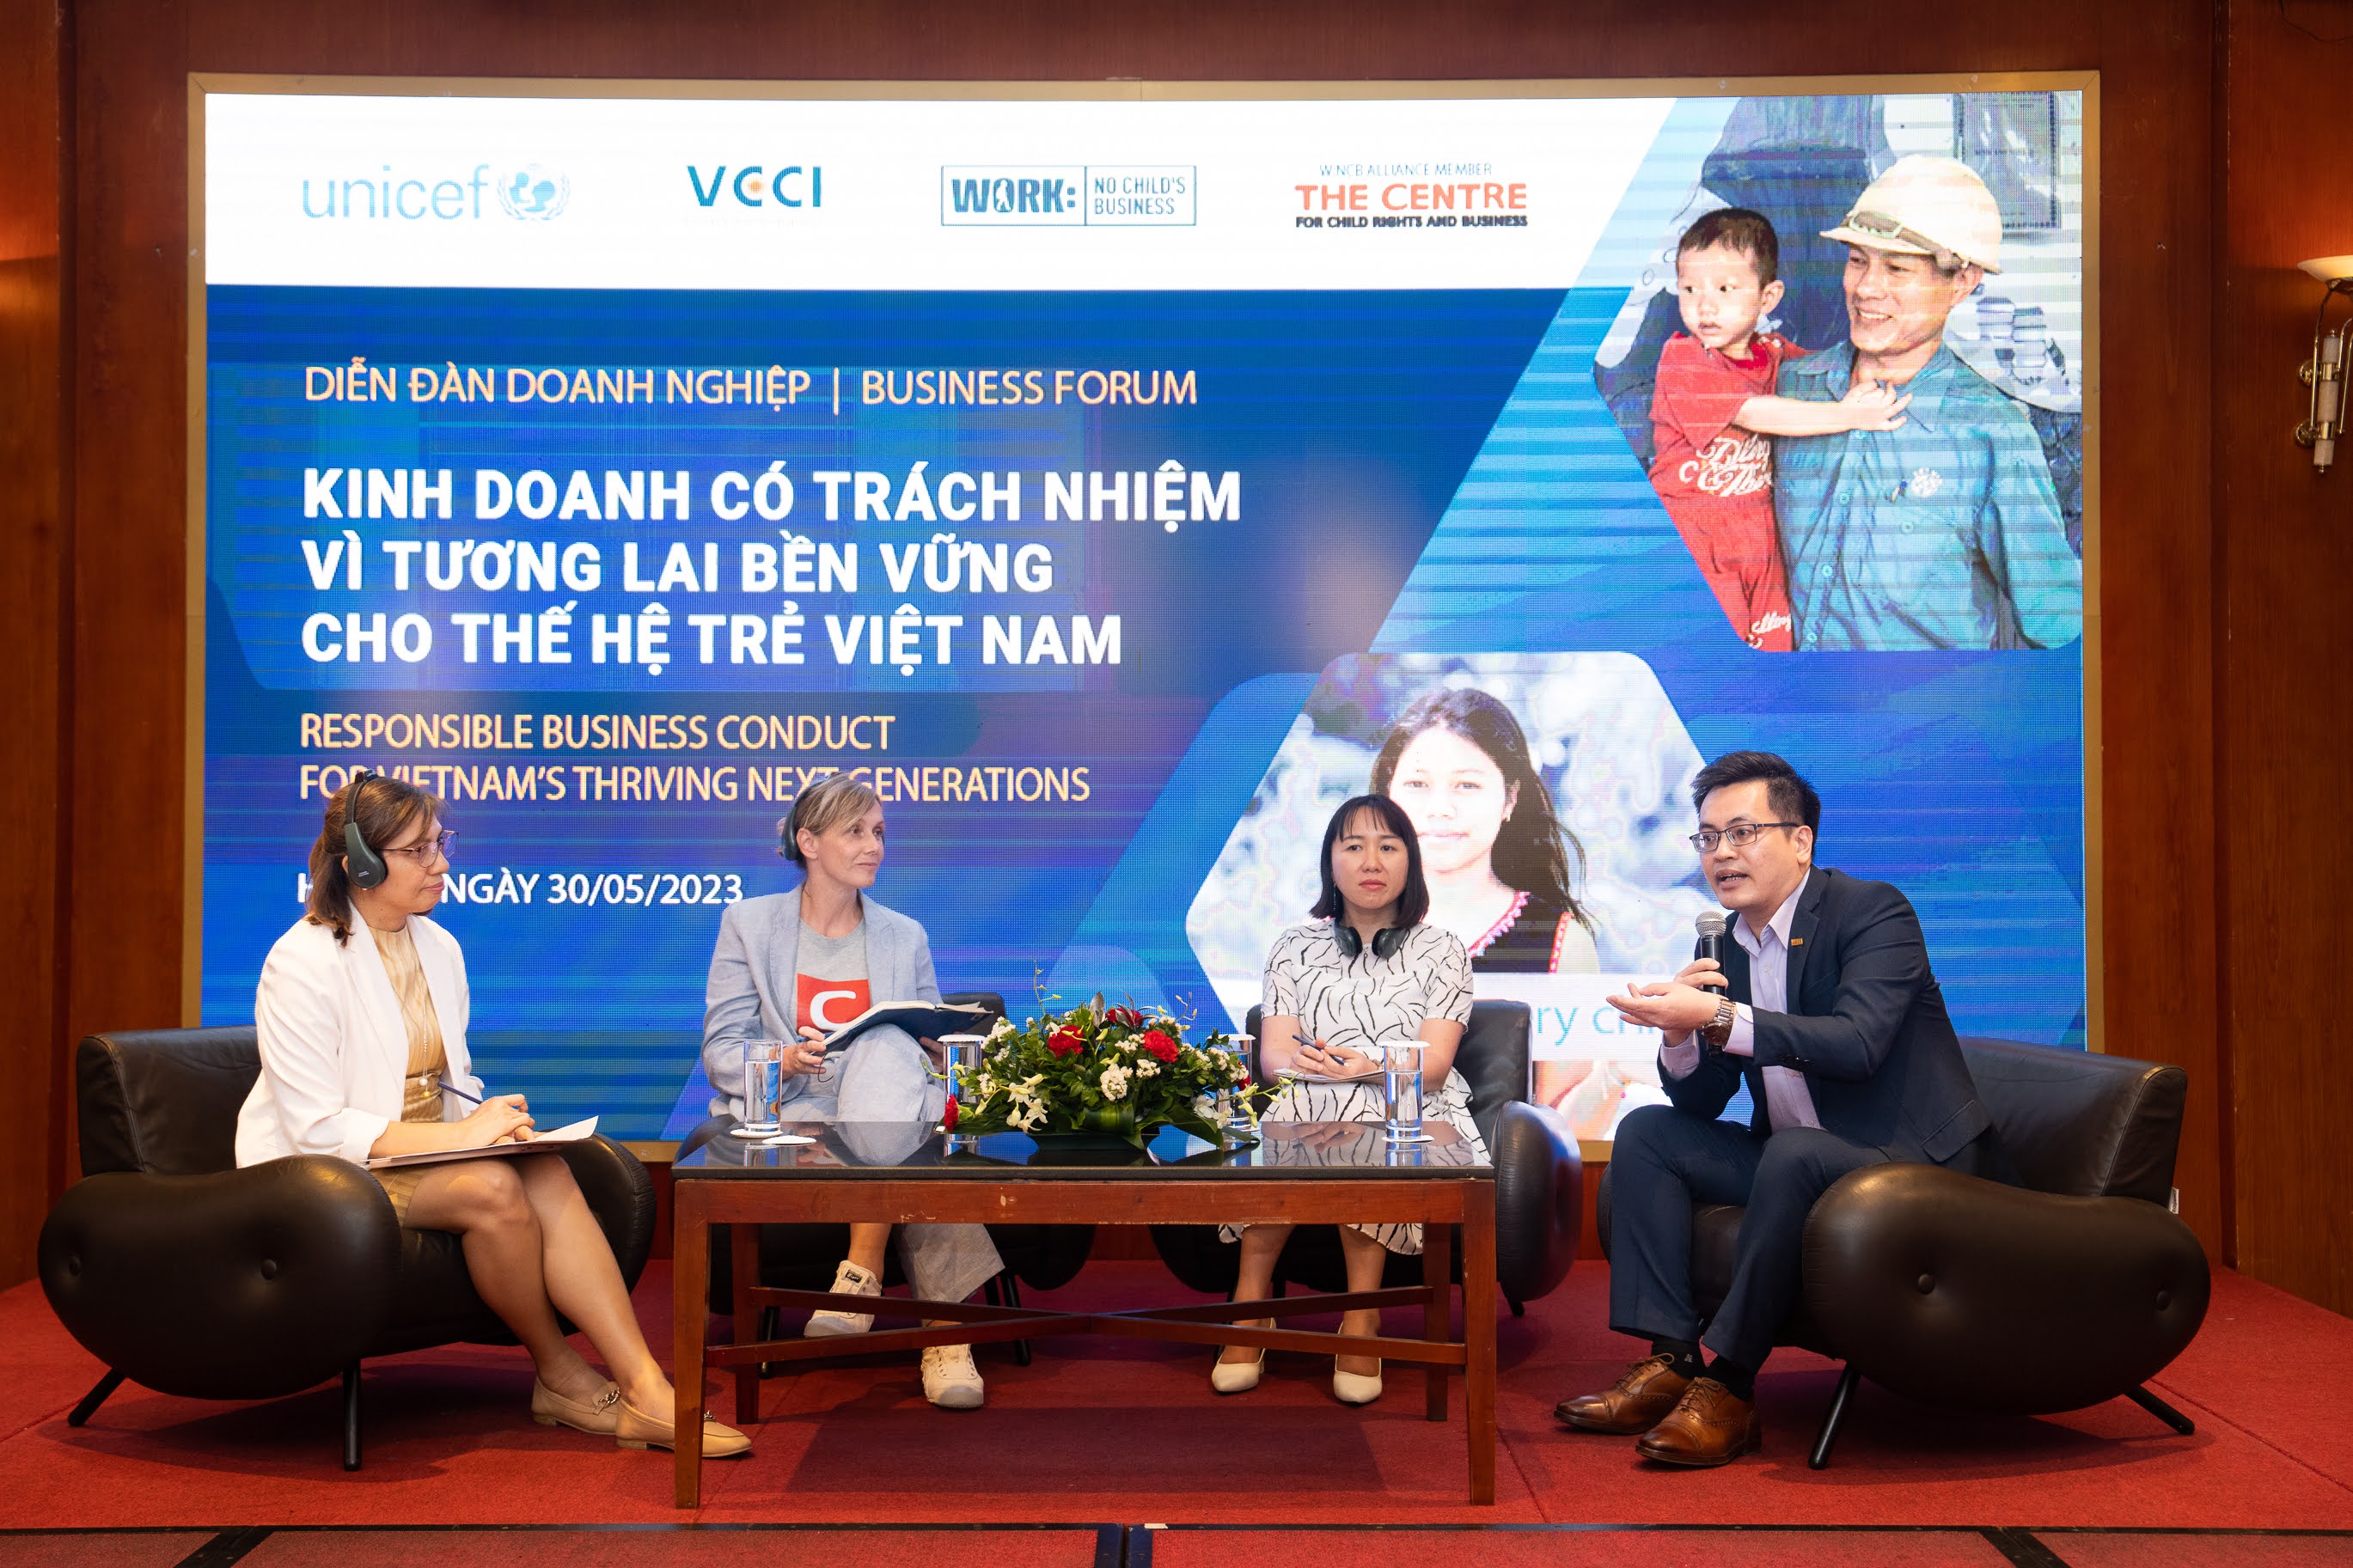 Children should be key consideration in ESG assessments: UNICEF Vietnam expert